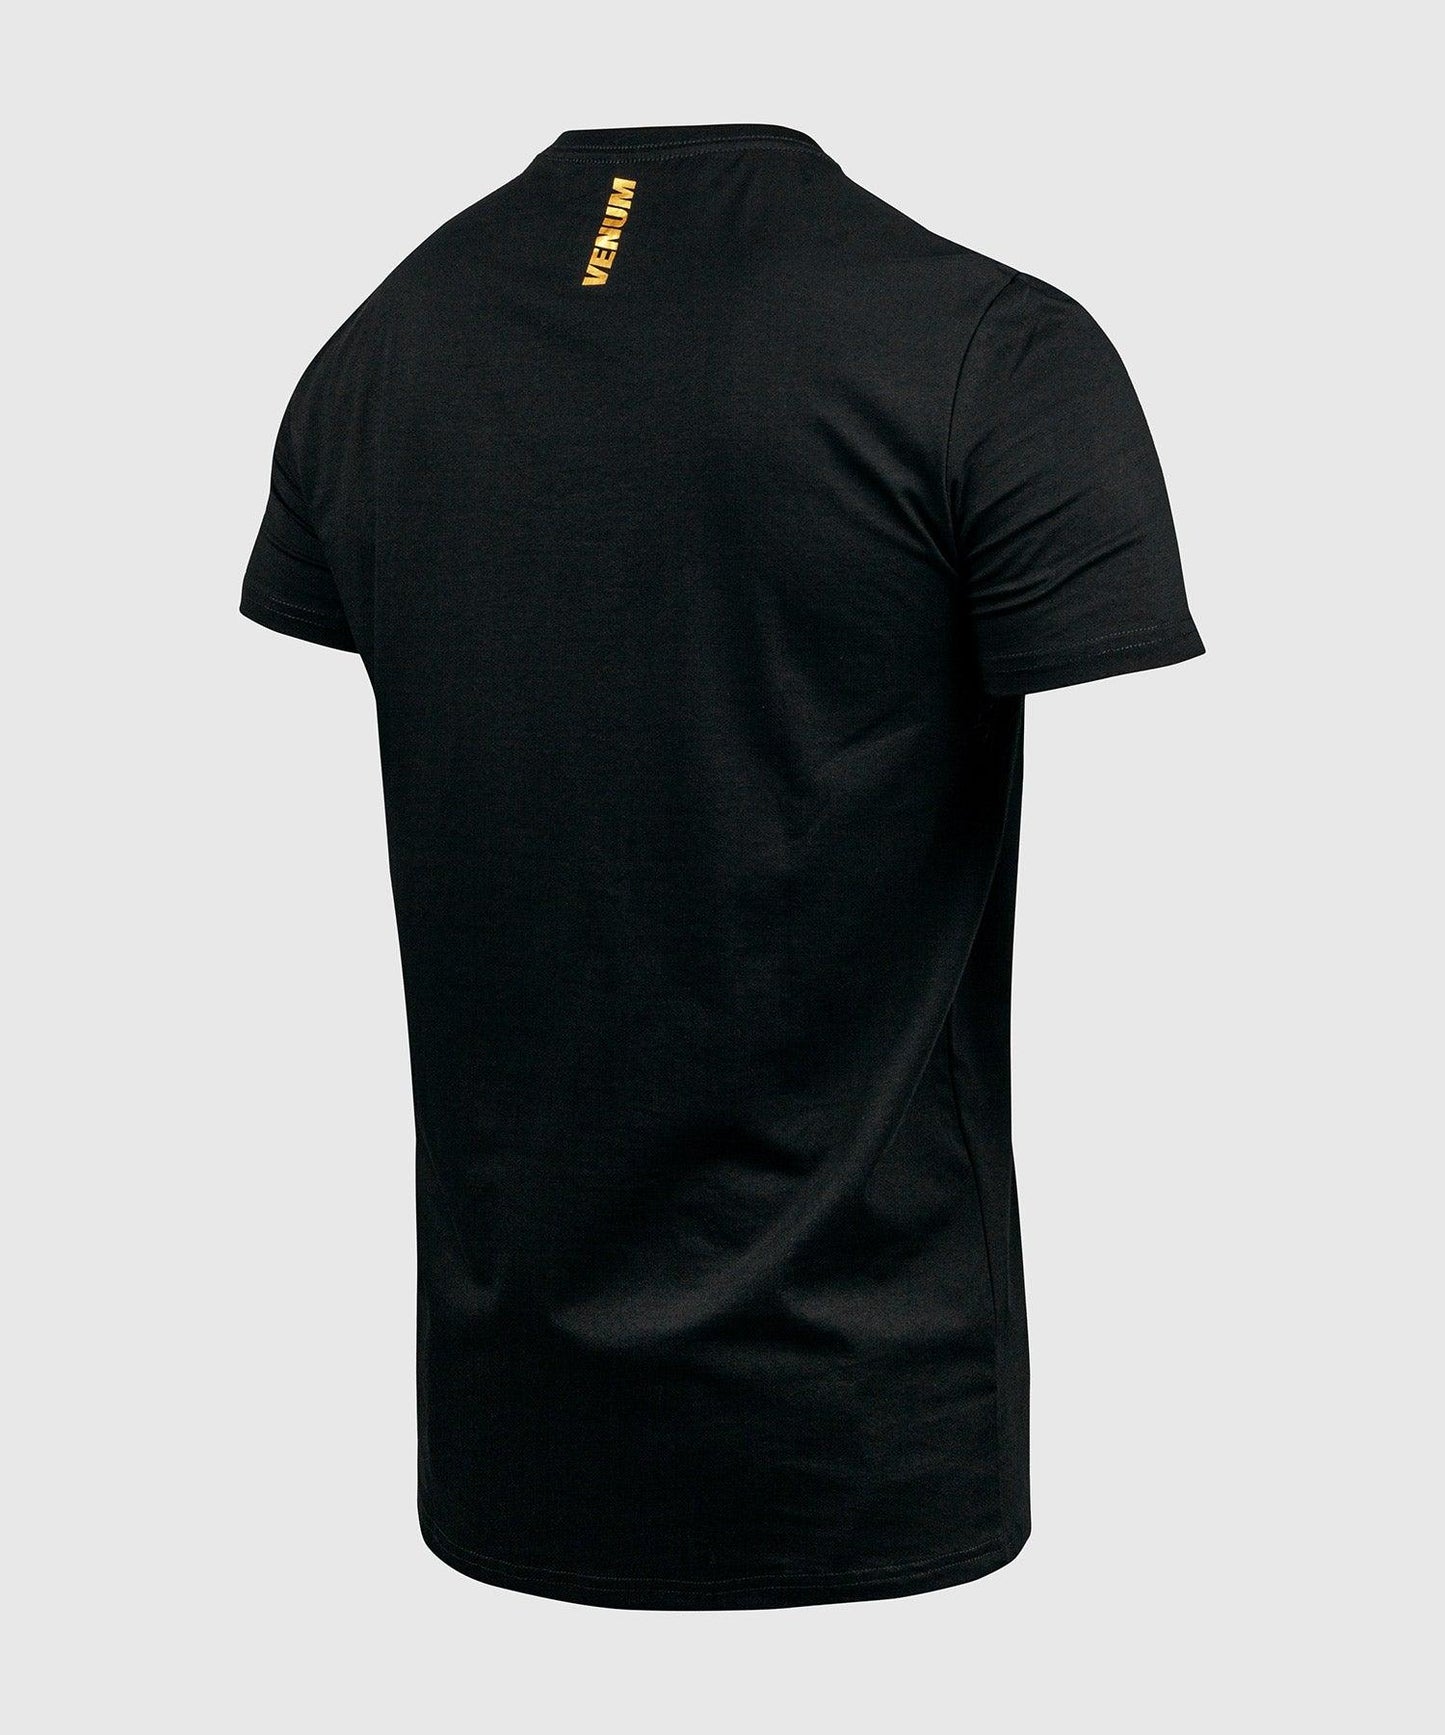 Venum MMA VT T-shirt - Black/Gold Picture 4